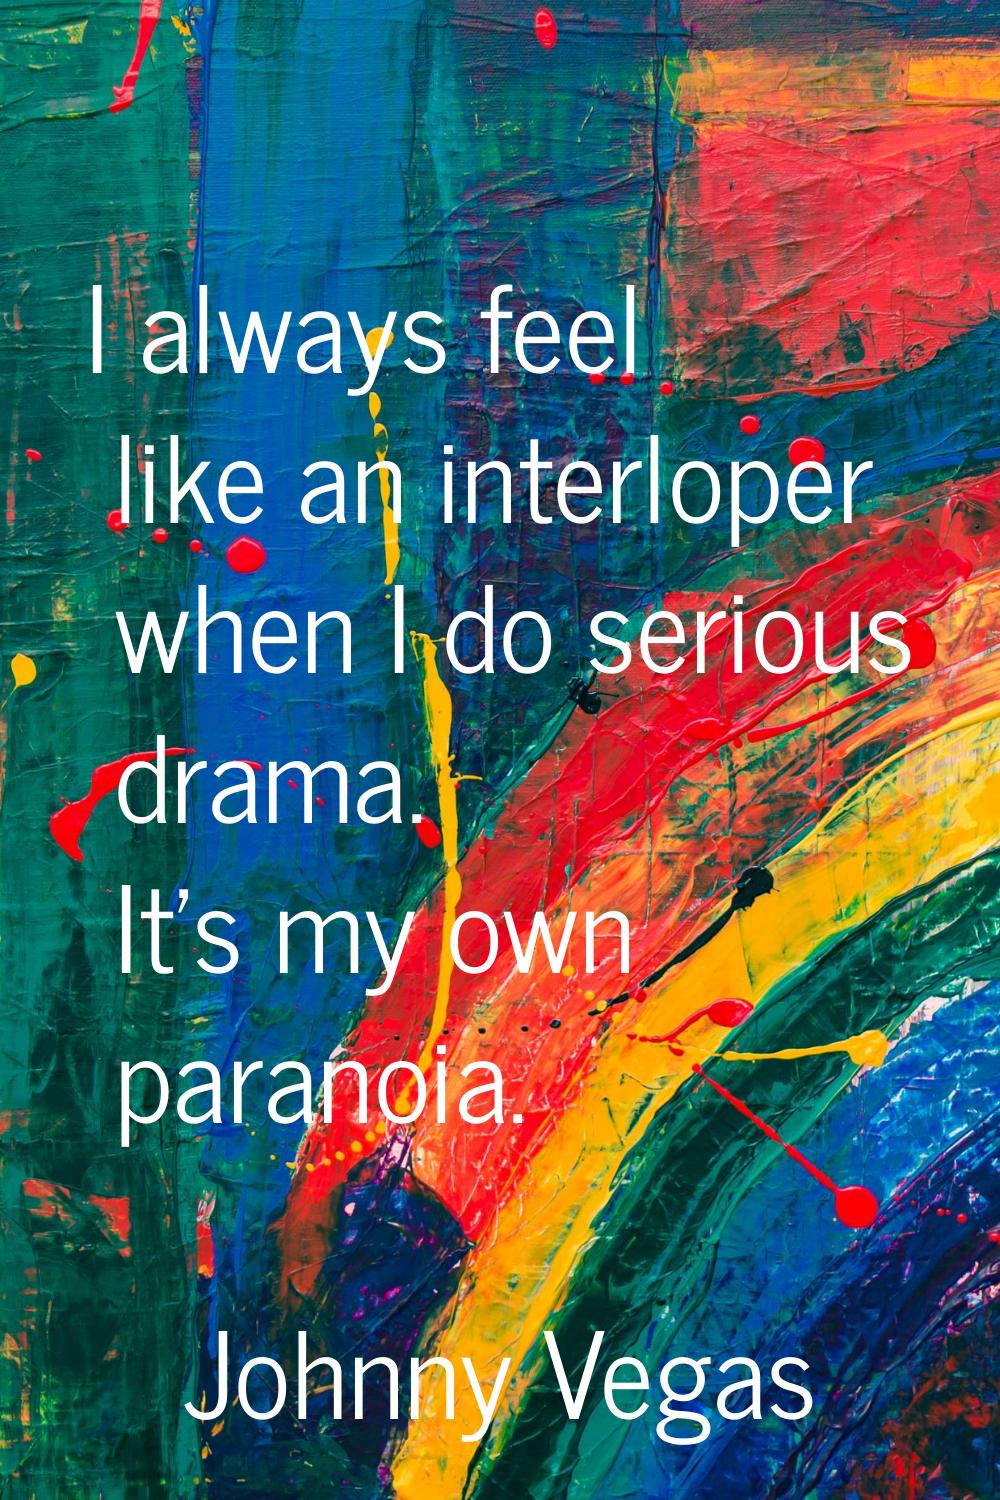 I always feel like an interloper when I do serious drama. It's my own paranoia.